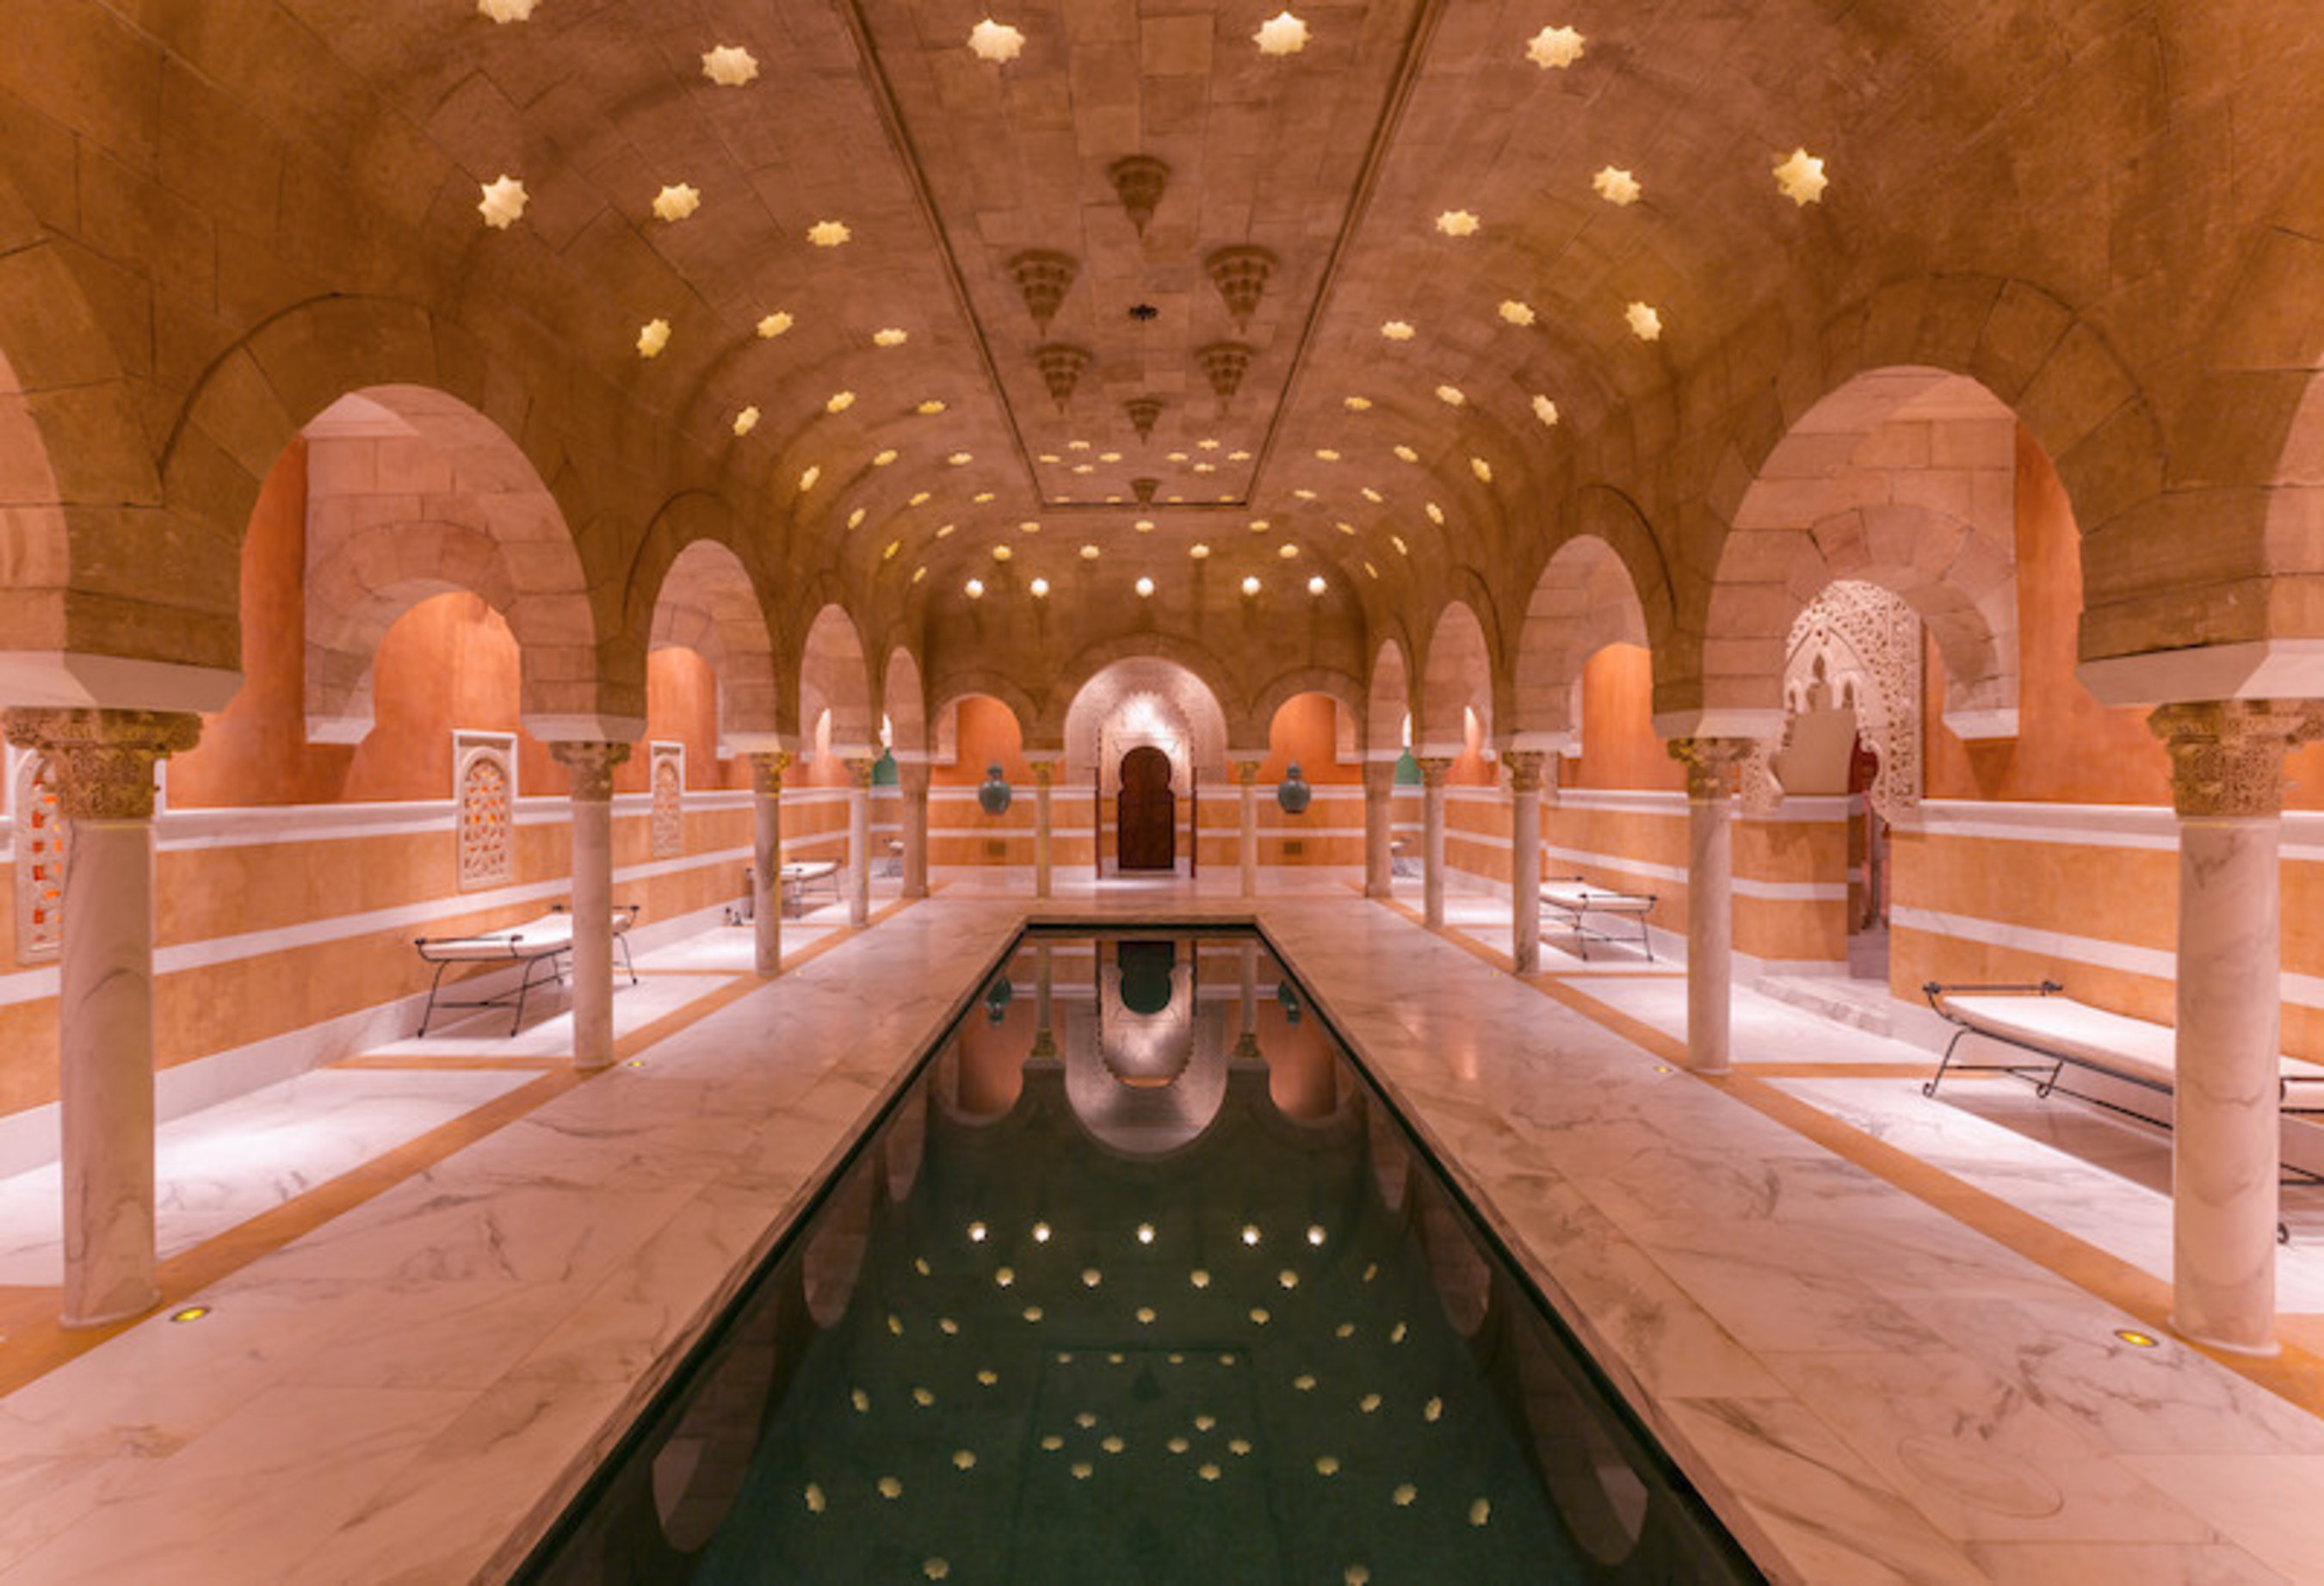 Hacienda de la Paz 10th century Moorish hamam spa indoor pool with sandstone ceiling and lights